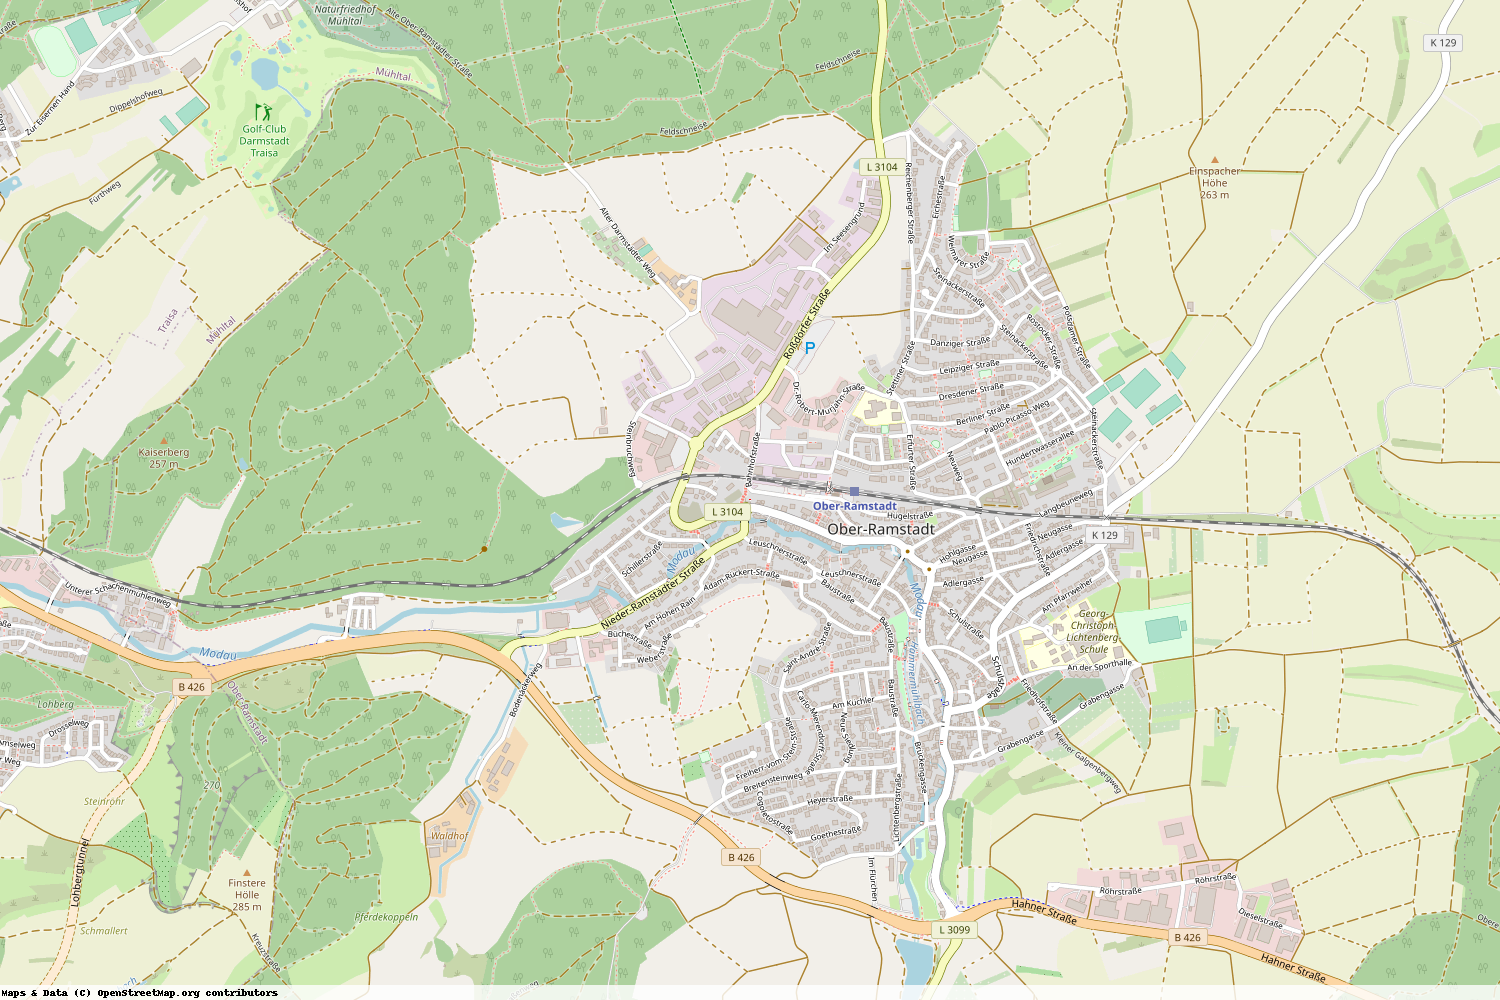 Ist gerade Stromausfall in Hessen - Darmstadt-Dieburg - Ober-Ramstadt?